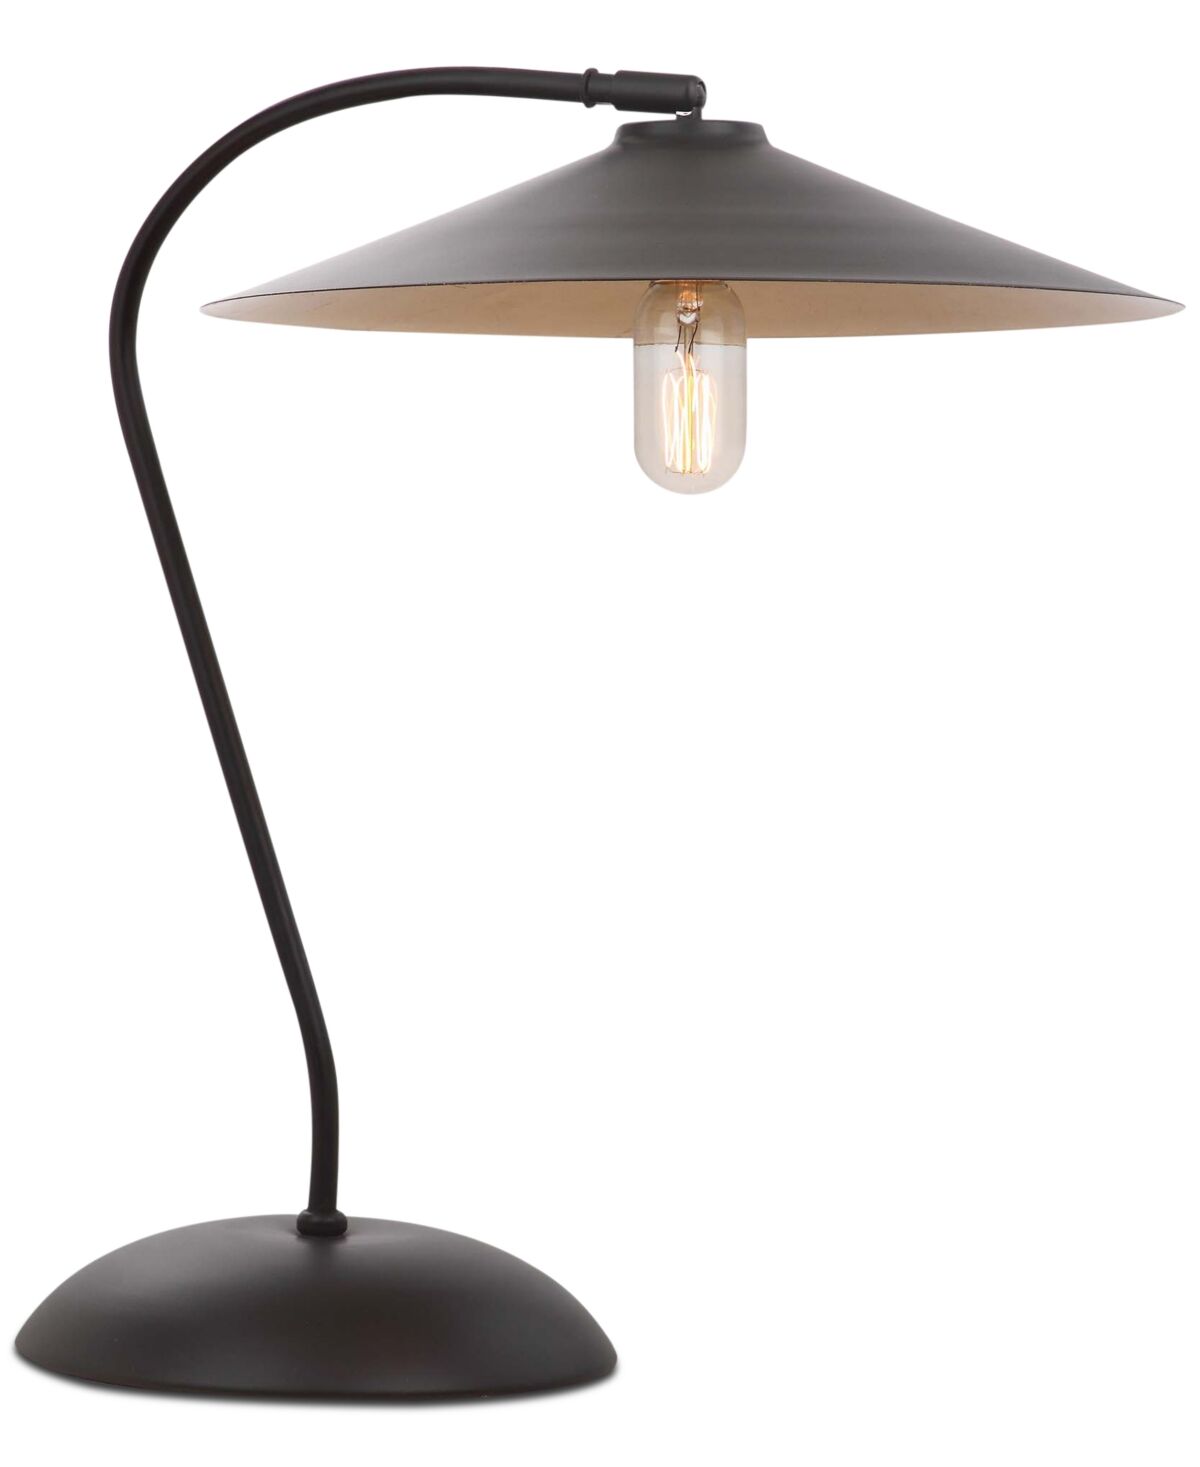 Safavieh Orla Arc Table Lamp - Black